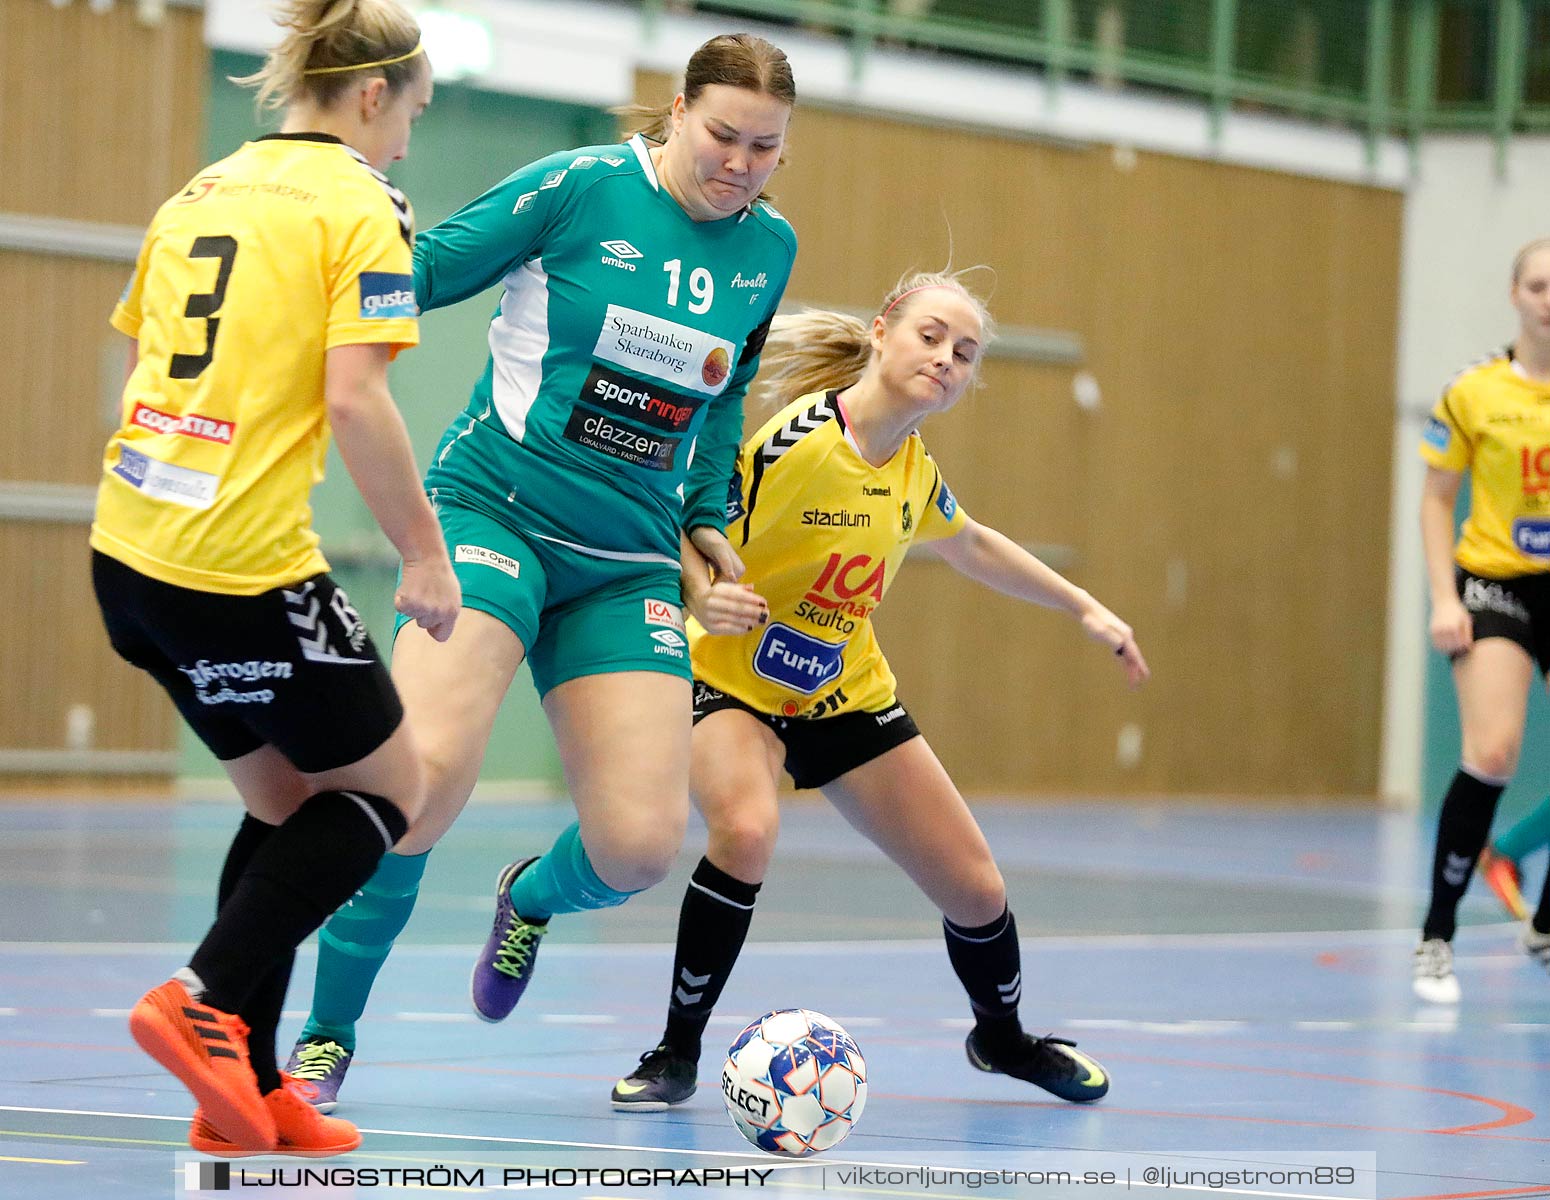 Skövde Futsalcup 2019 Damer Skultorps IF-Axvalls IF,dam,Arena Skövde,Skövde,Sverige,Futsal,,2019,227009